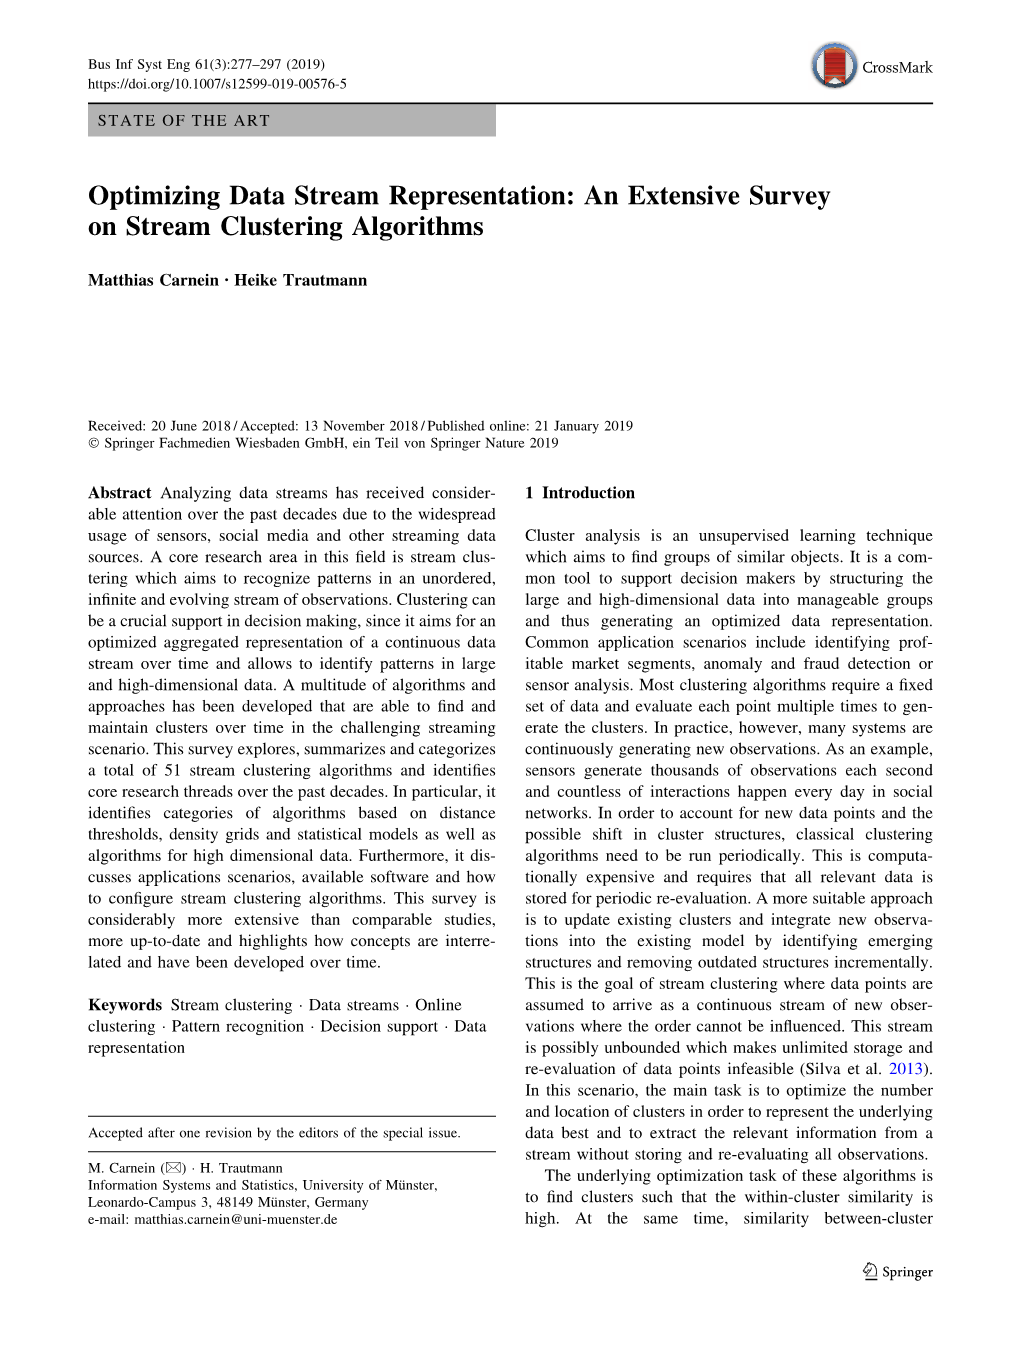 Optimizing Data Stream Representation: an Extensive Survey on Stream Clustering Algorithms